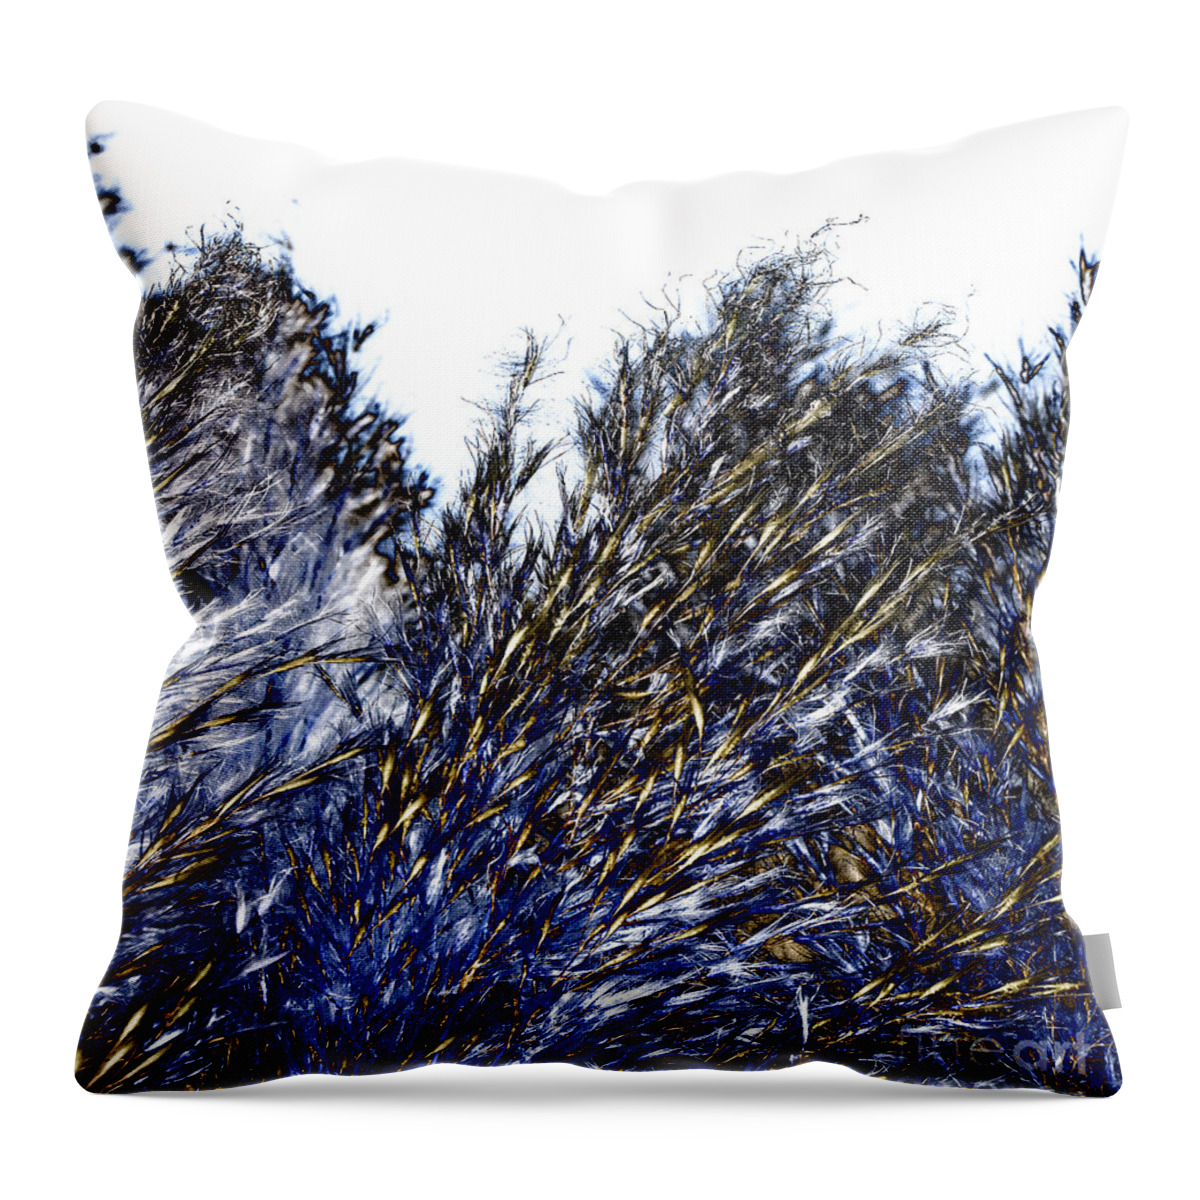 Prott Throw Pillow featuring the digital art Grass solarisation by Rudi Prott